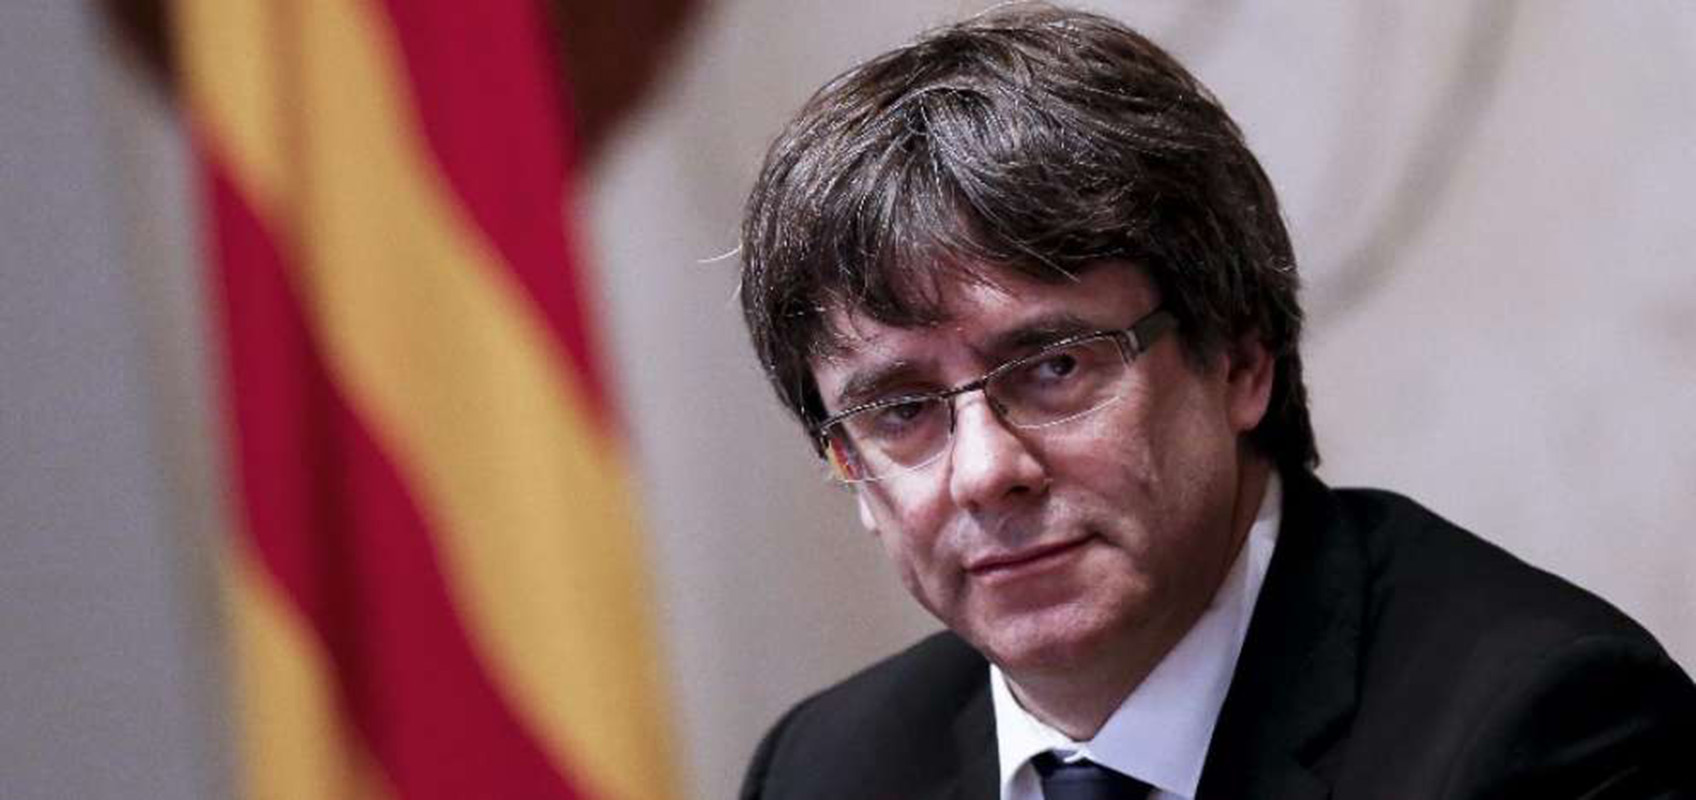 Juez español declina reactivar euroorden de detención contra Puigdemont